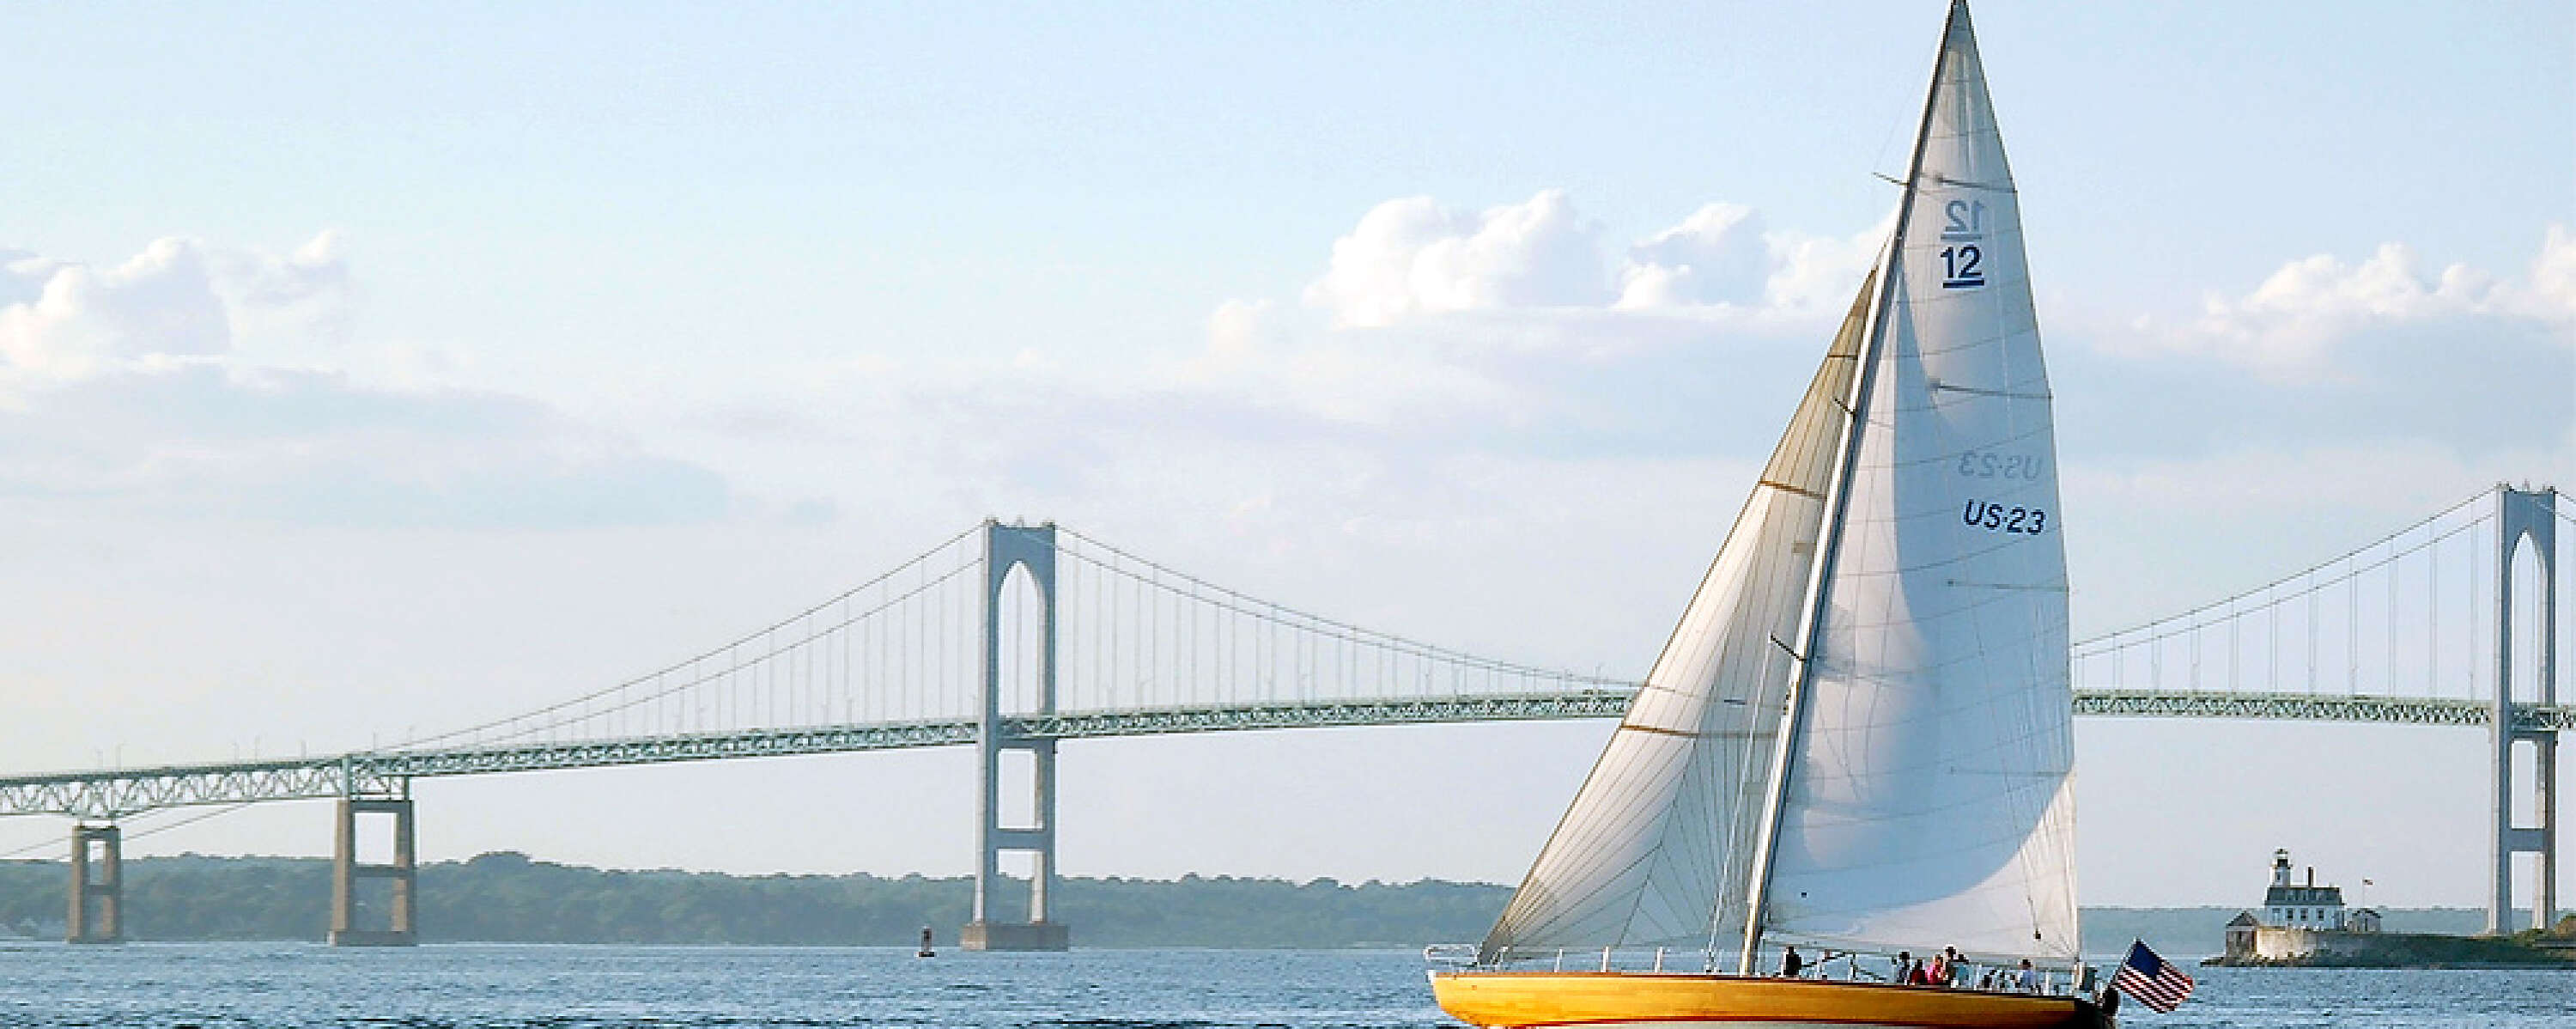 Sailboat sailing in front of a bridge in Newport